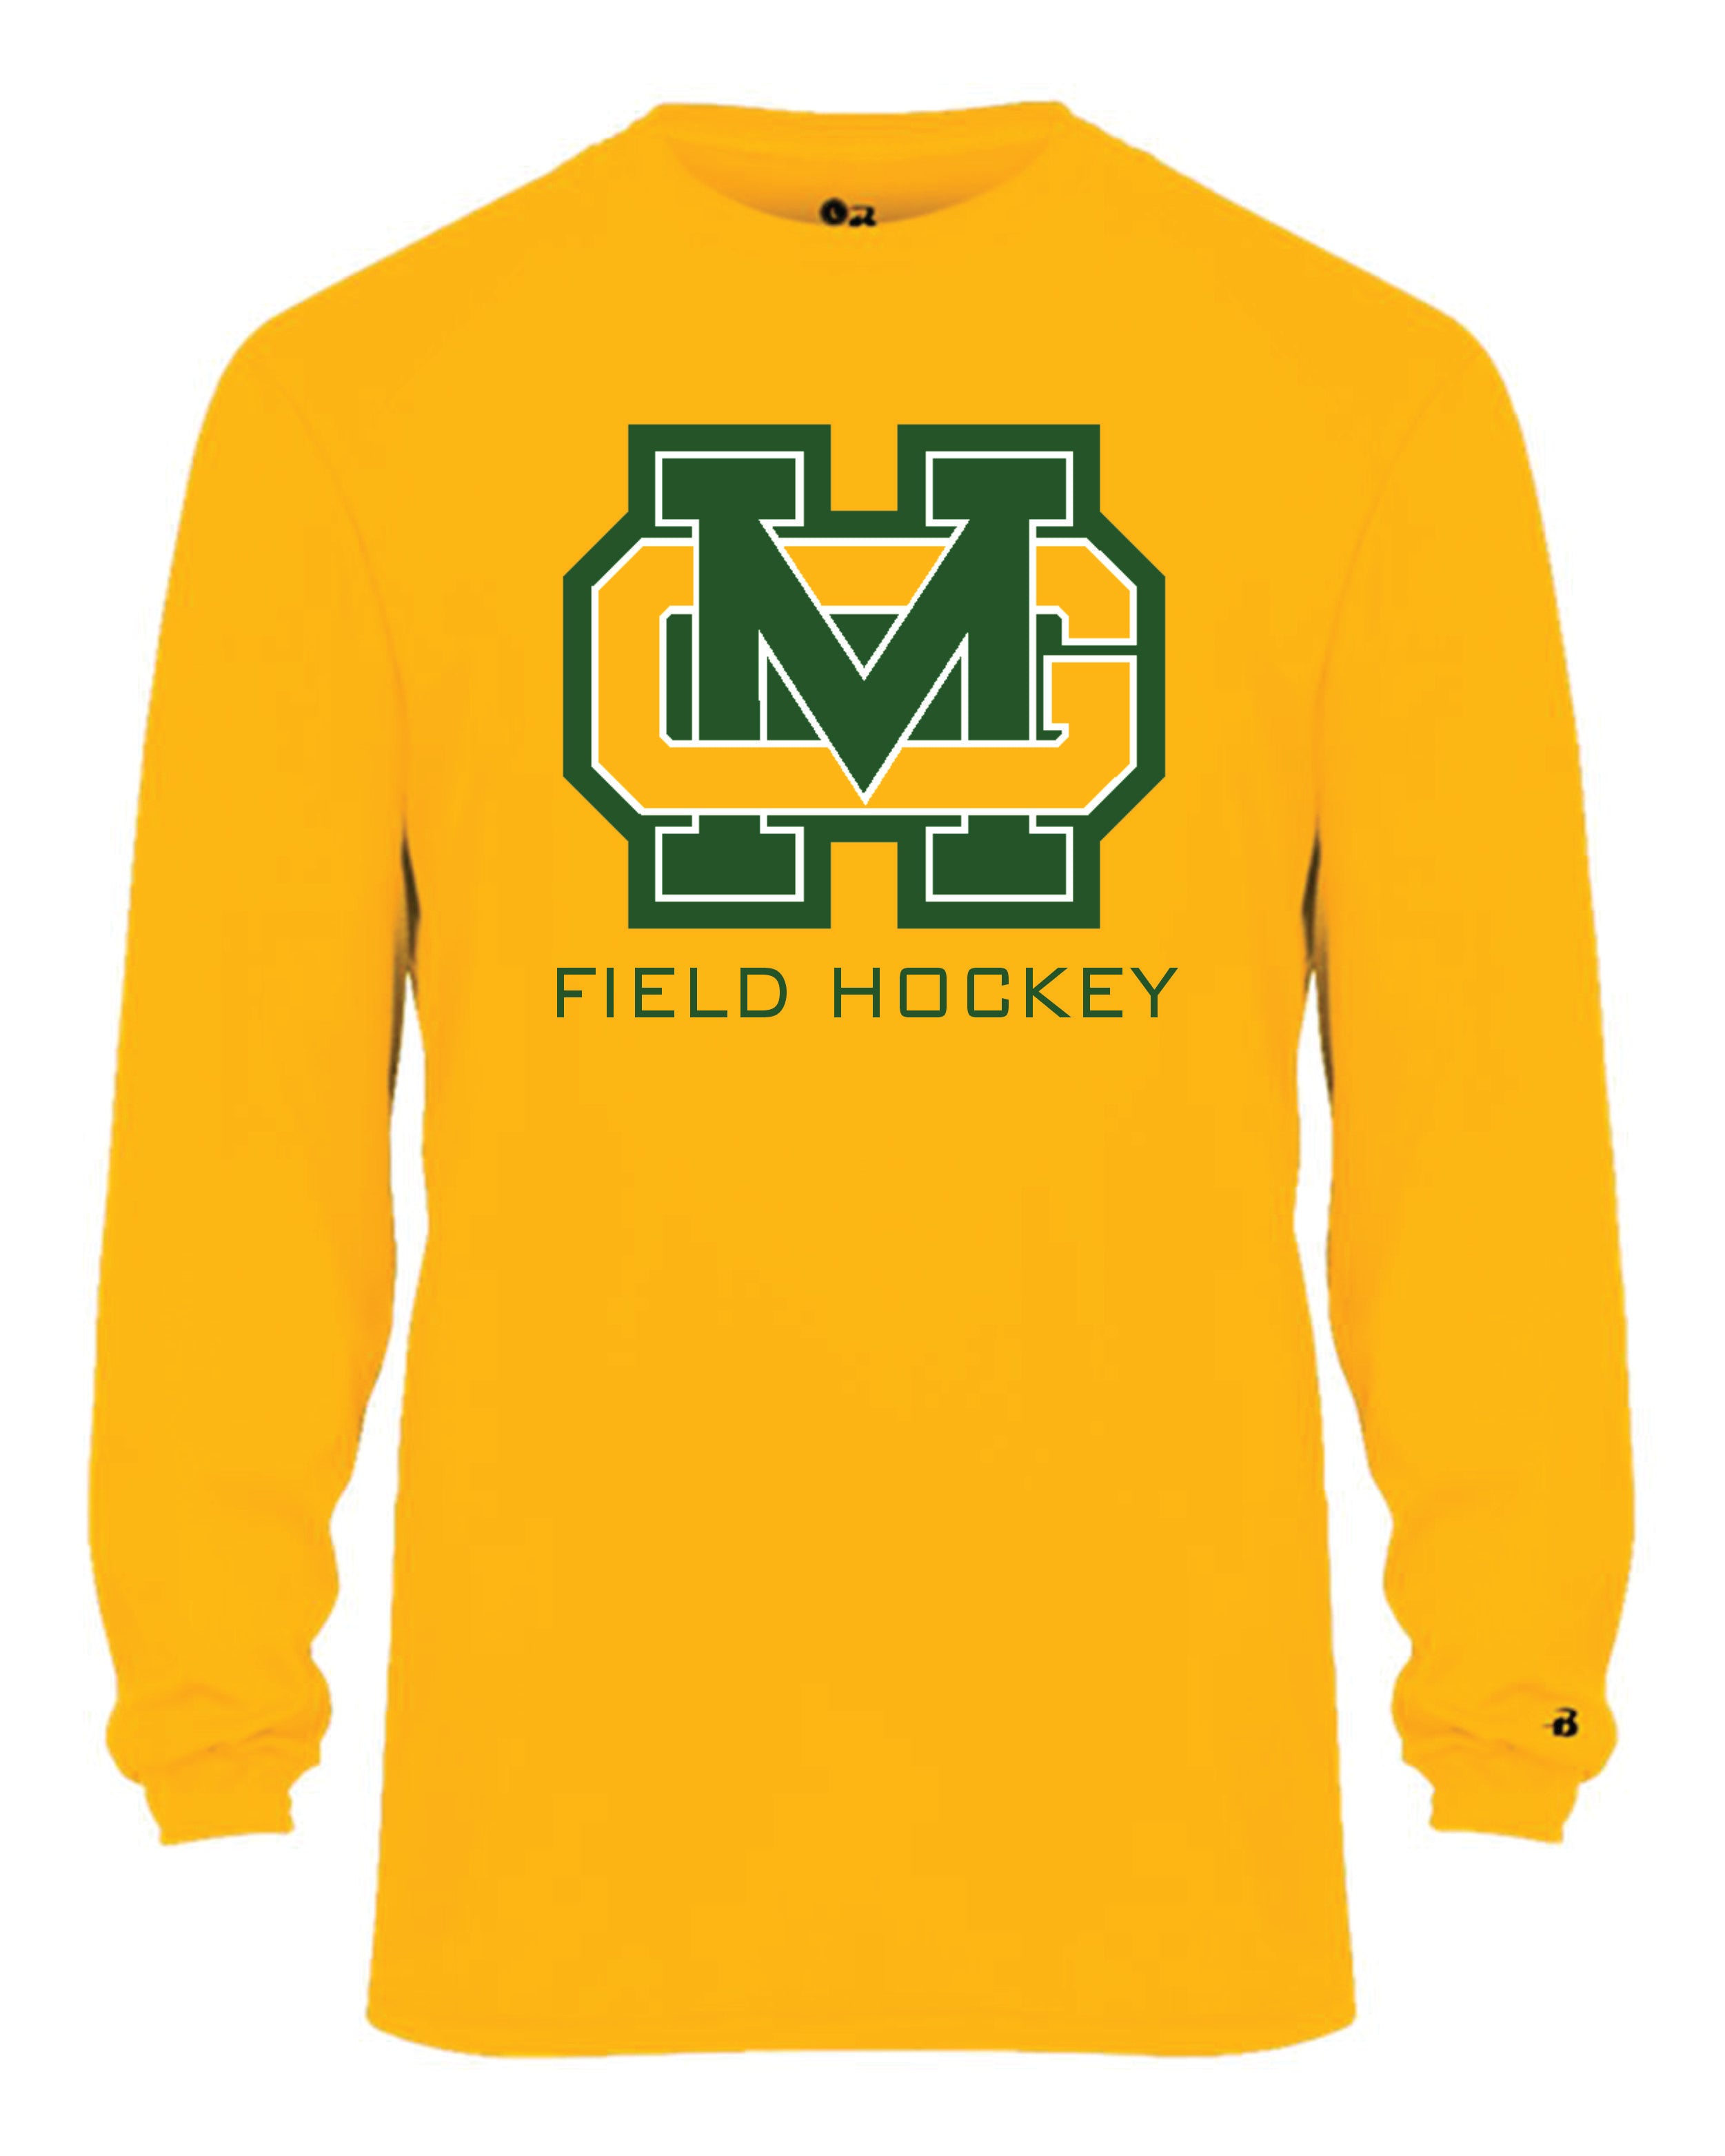 Great Mills Field Hockey Long Sleeve Badger Dri Fit Shirt - WOMEN